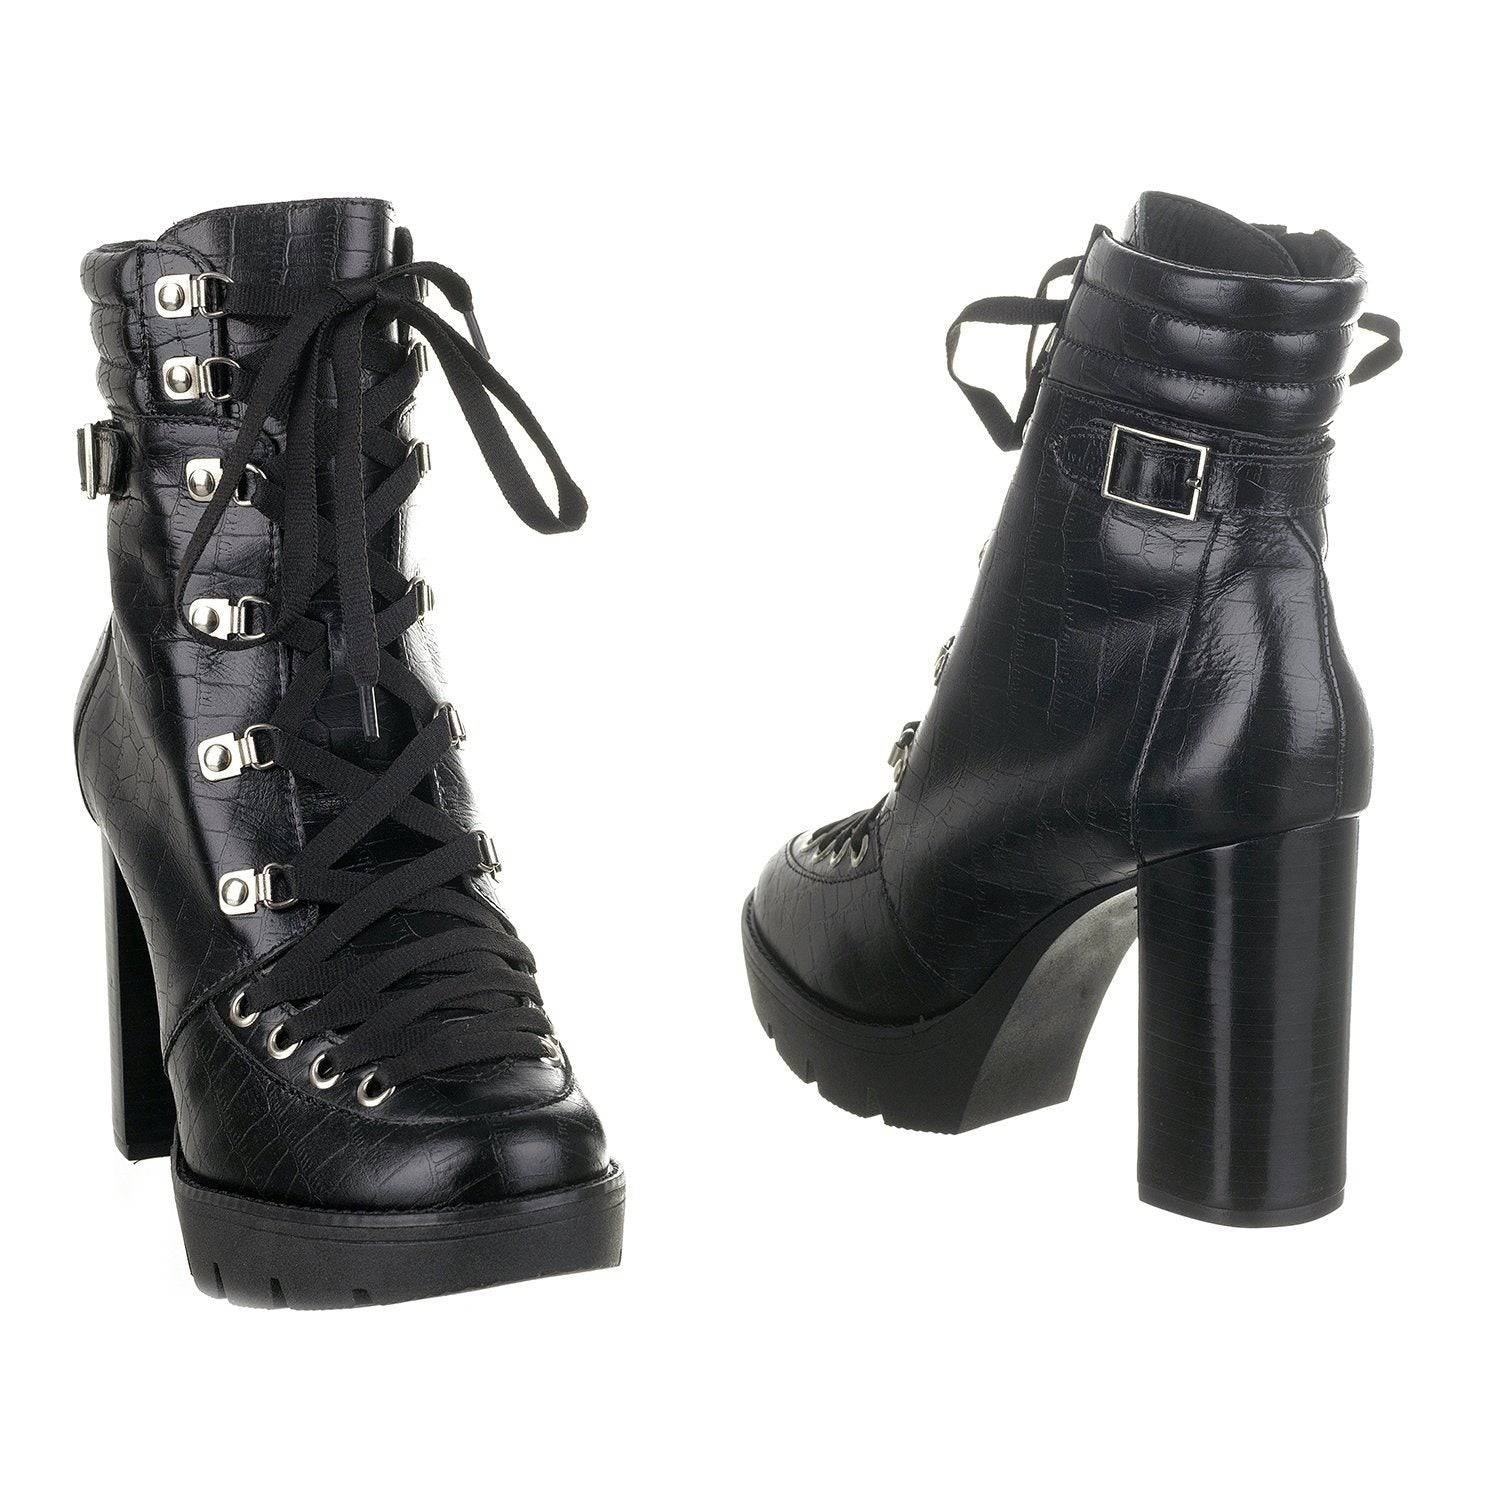 Elevation - Women’s Leather Black Ankle Boots - Juliana Heels 